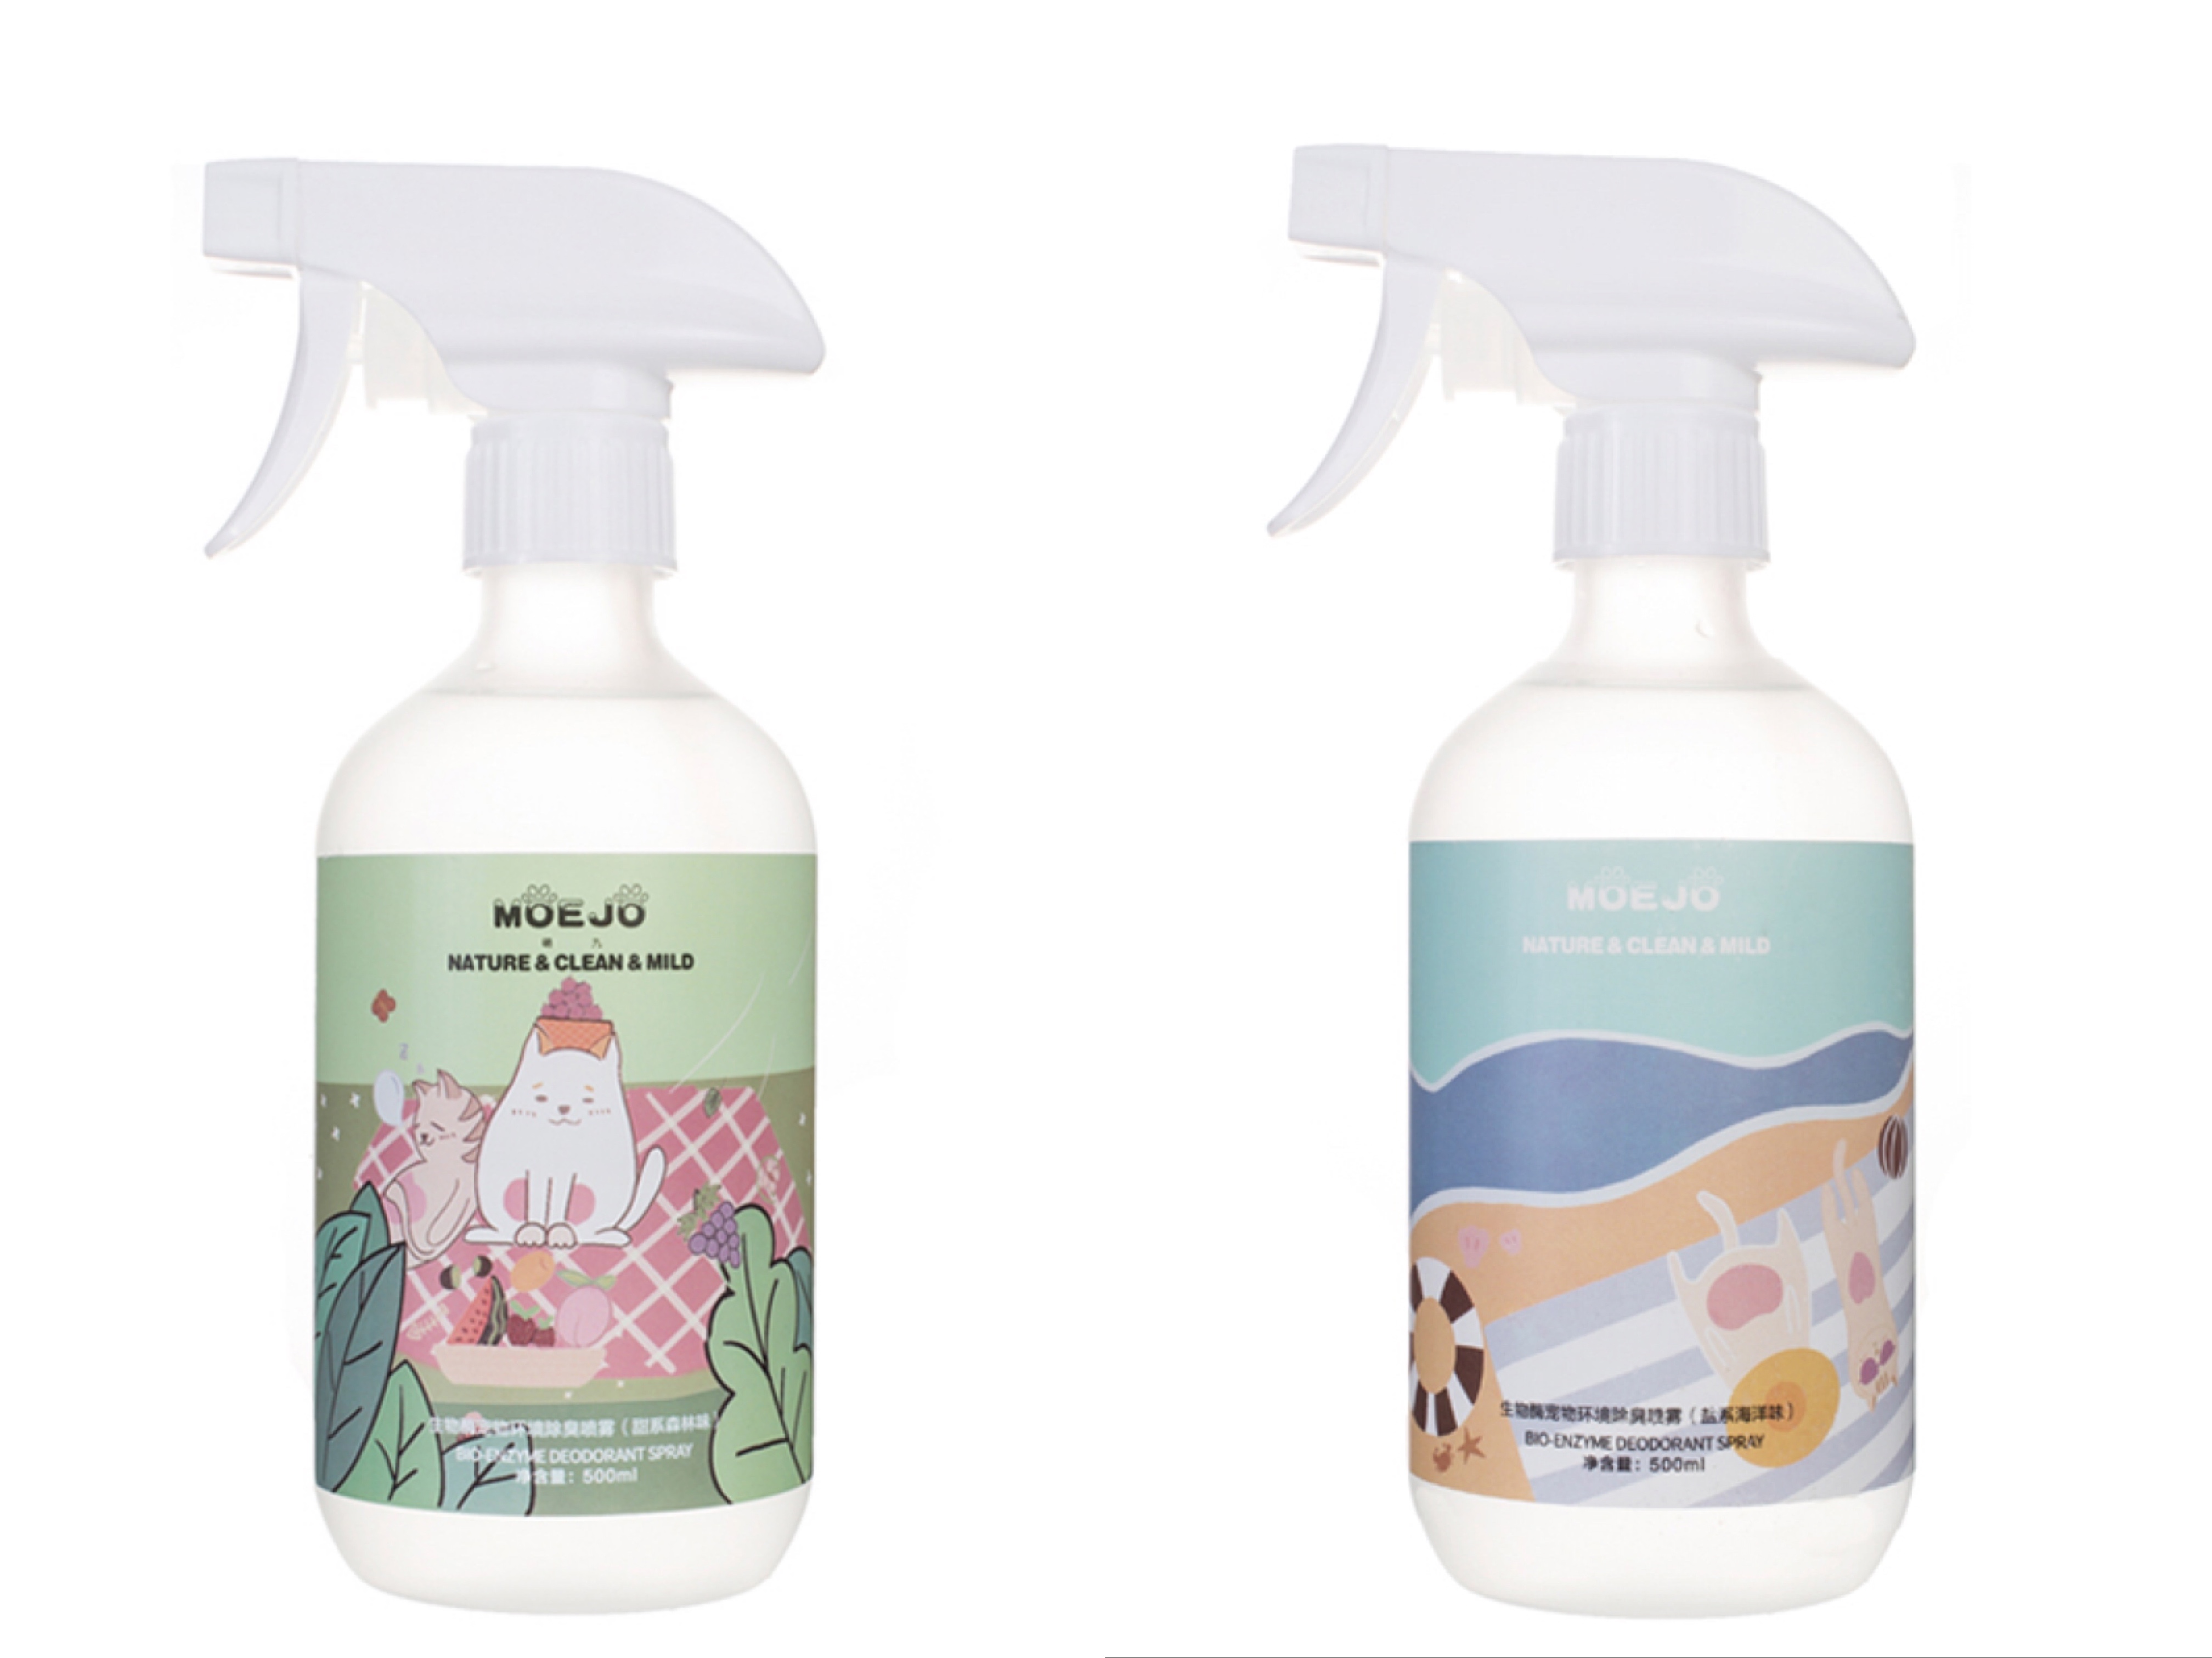 https://www.skylarkchemical.com/super-healthy-pet-environment-deodorant-spray-product/